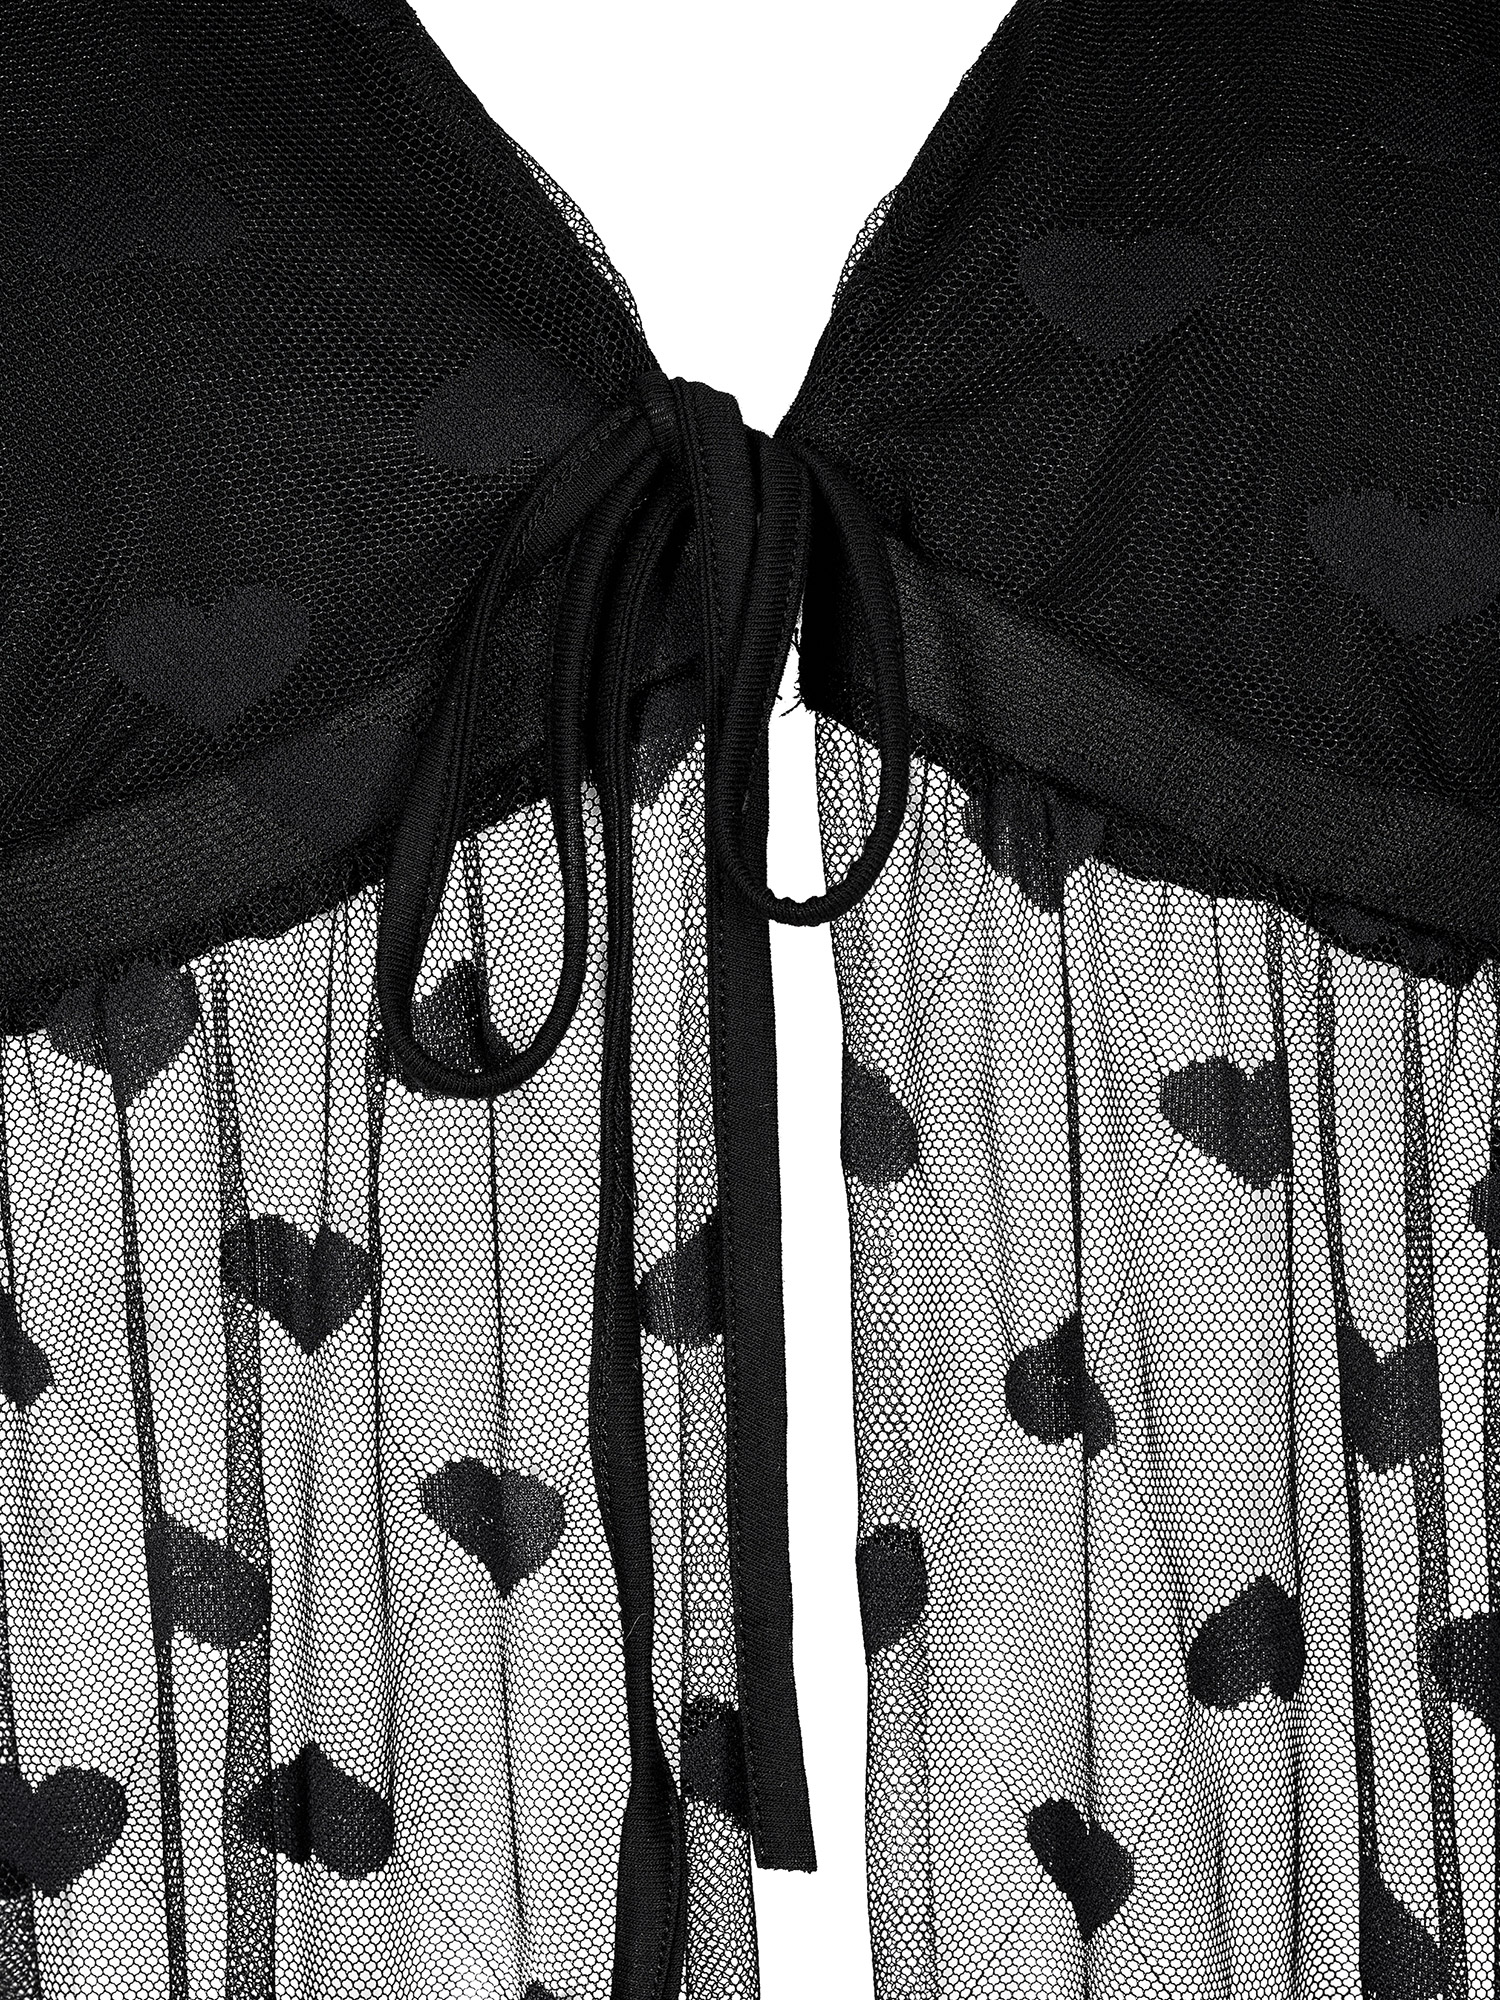 Flot sort  transparent natkjole med hjerte mønster fra Zizzi